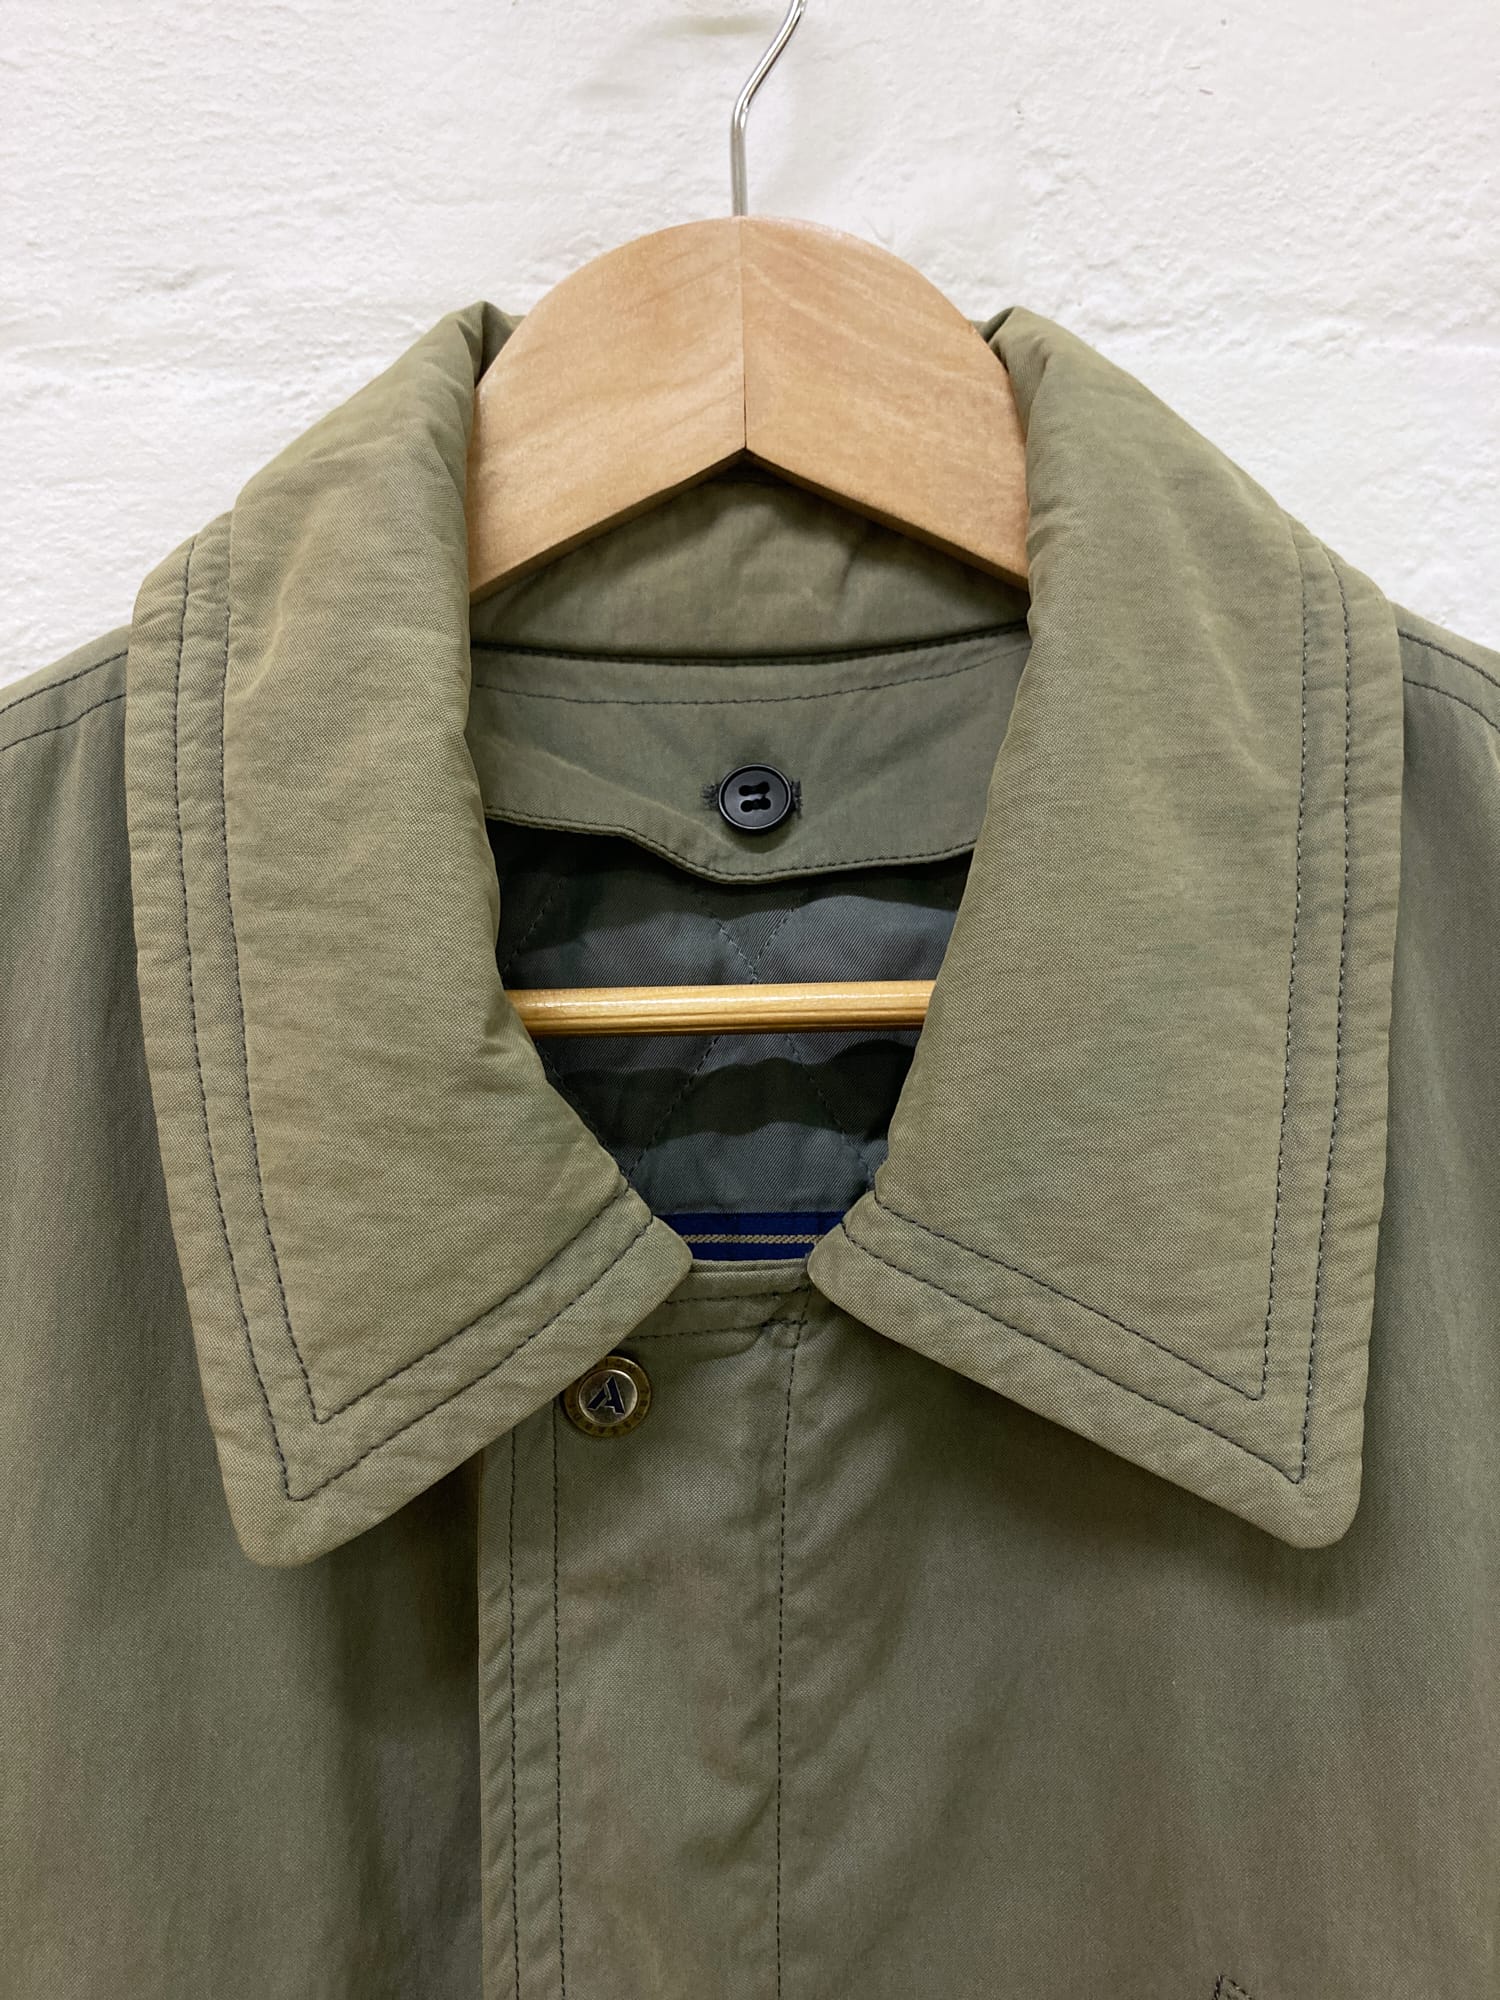 Trussardi Action 1990s oversized cotton military jacket - size 48